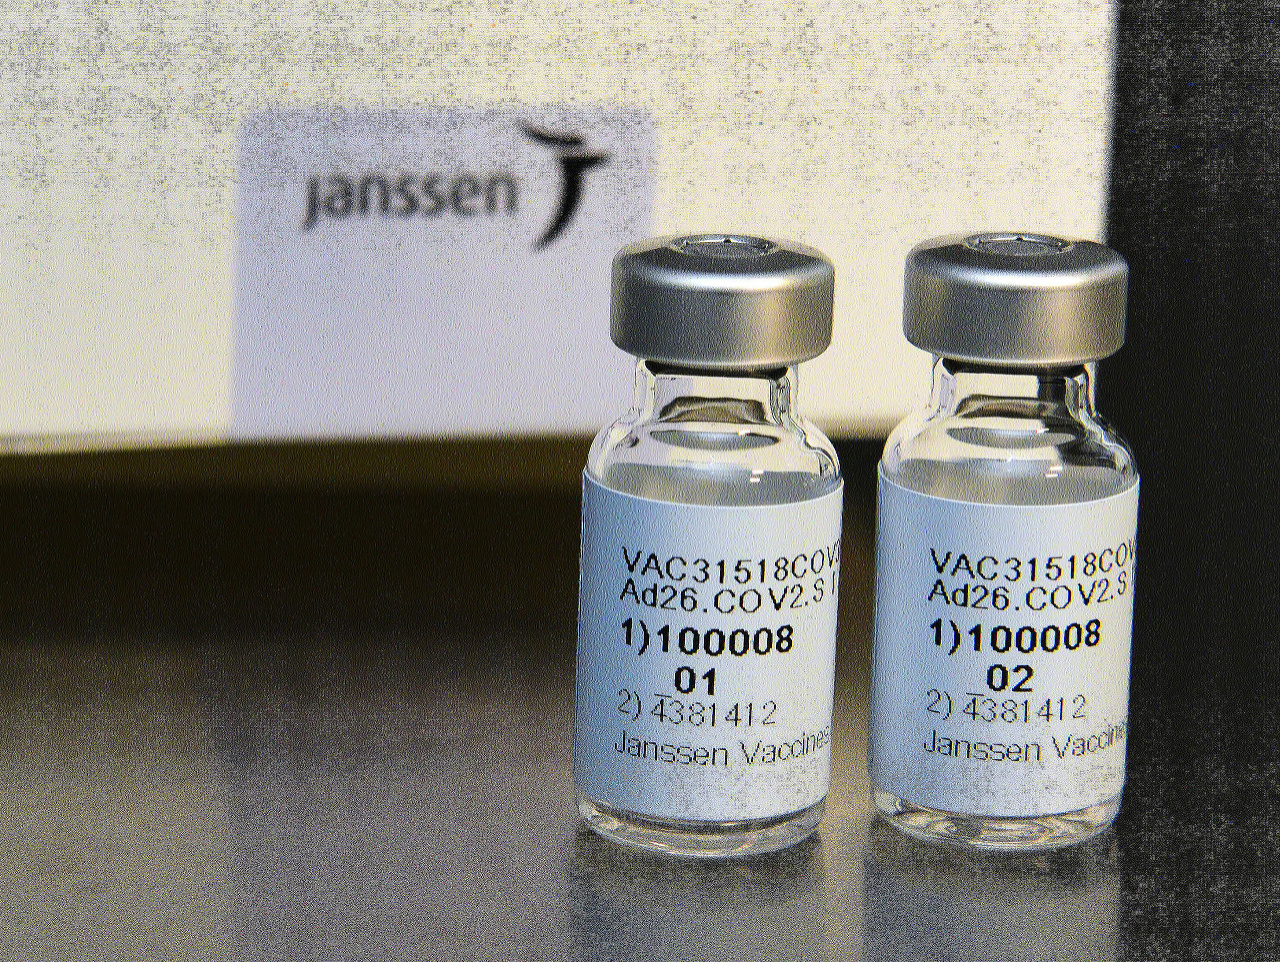 Vakcína od Johnson & Johnson